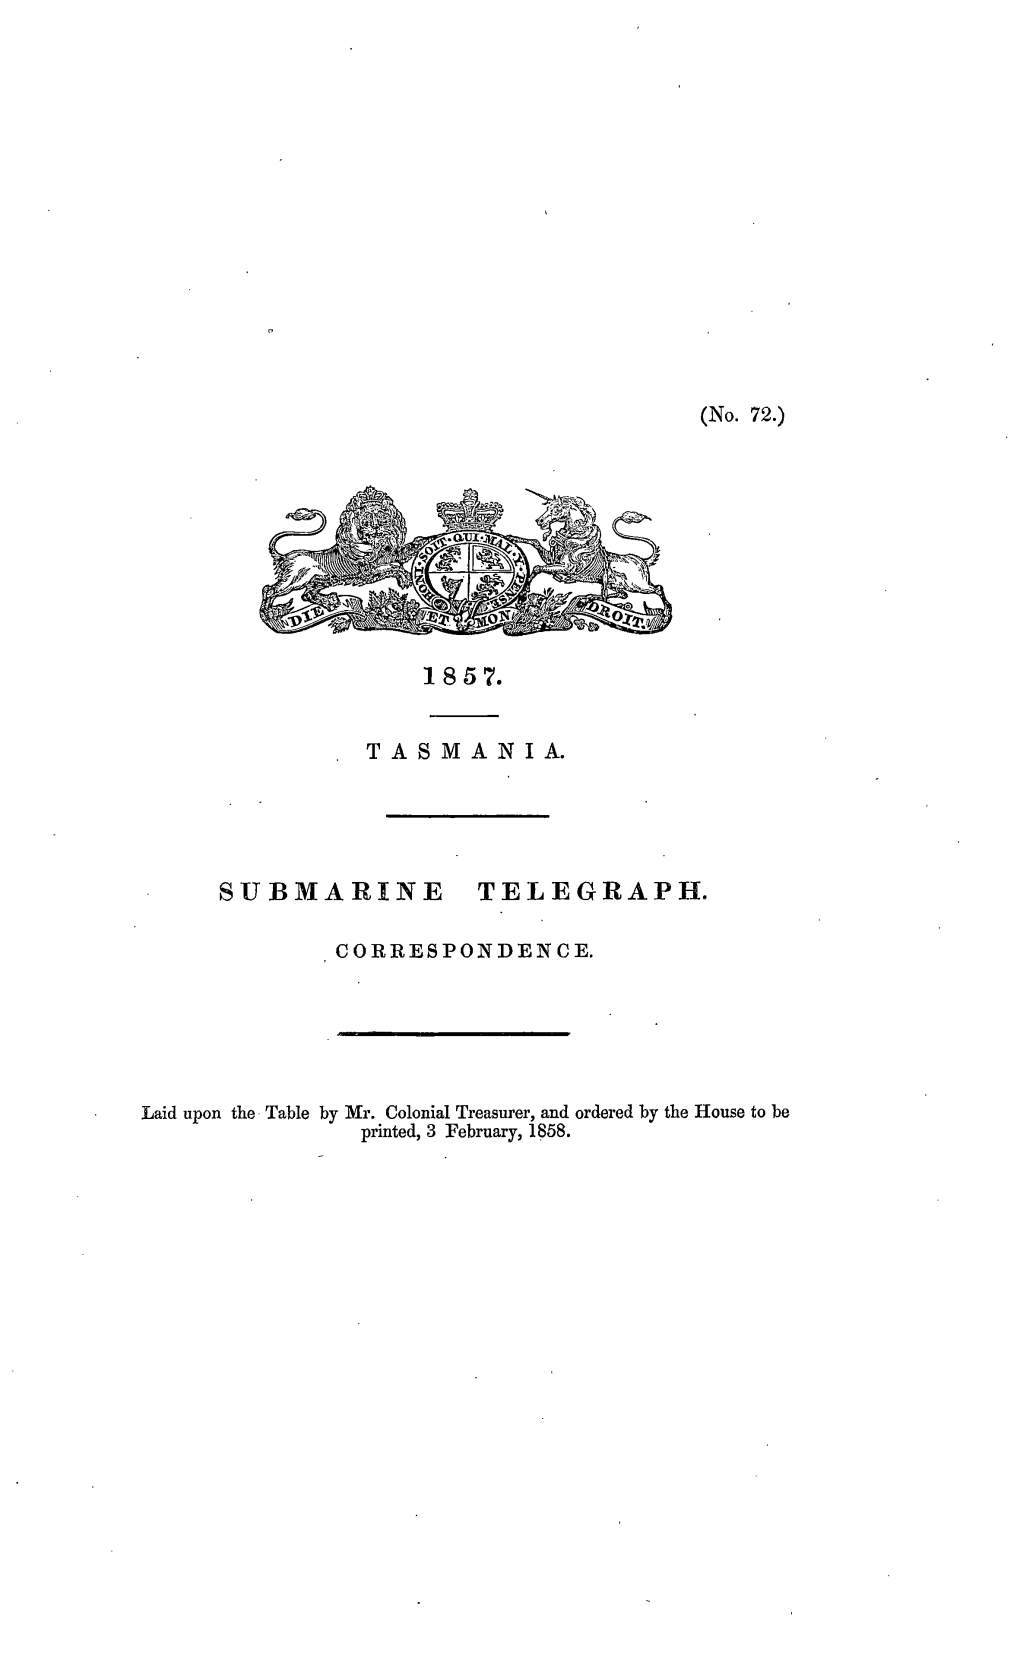 Submarine Telegraph Correspondence